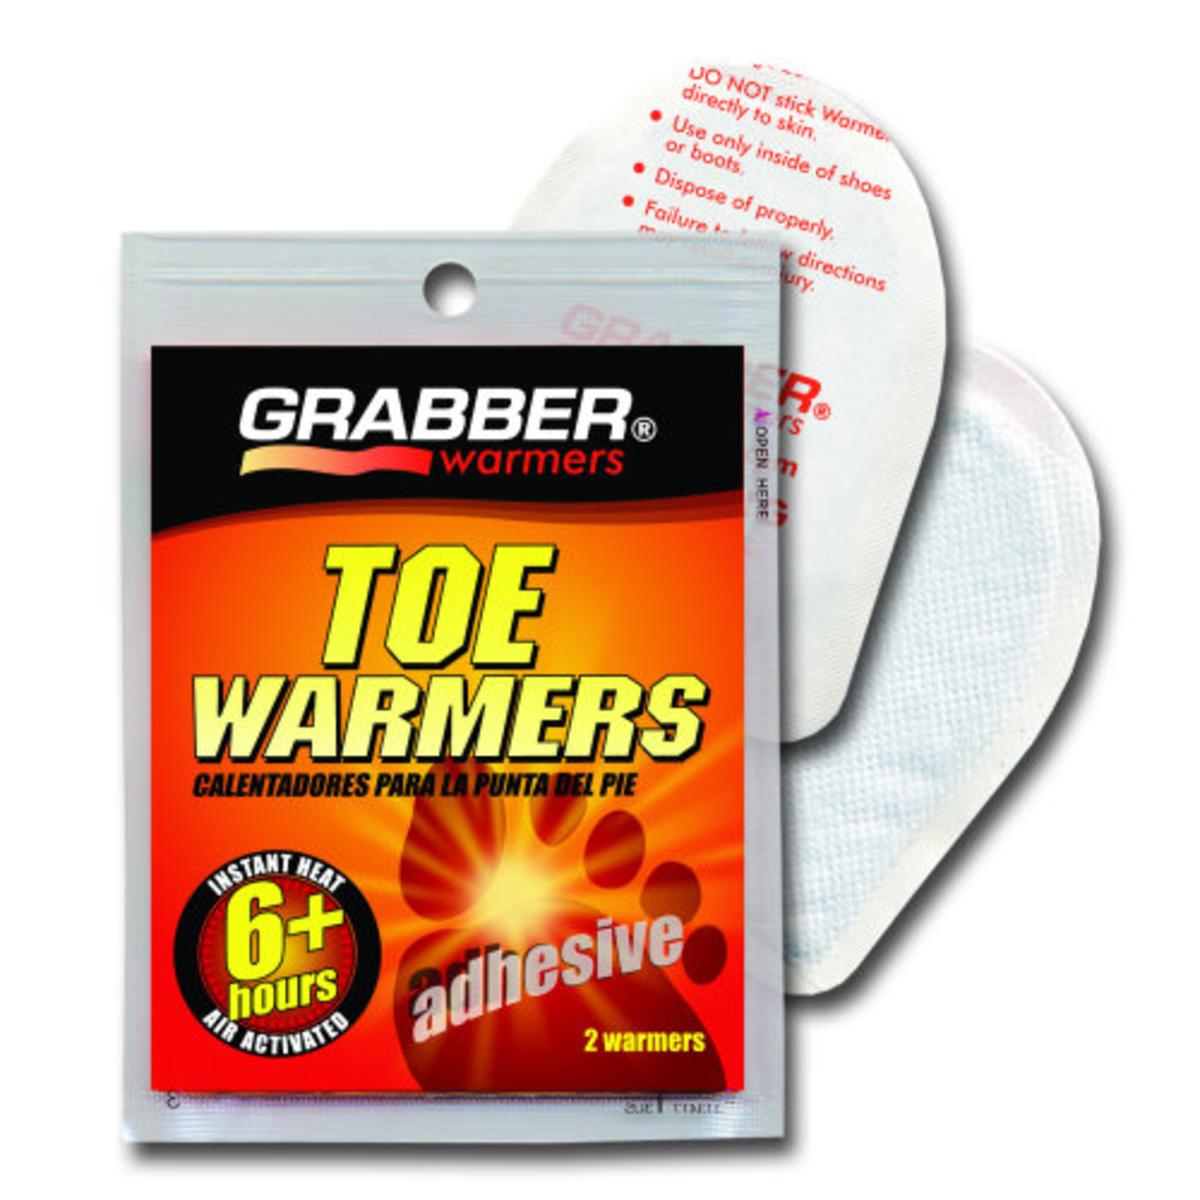 Grabber Warmers 6+ Hour Adhesive Toe Warmers - 40 Pair Box